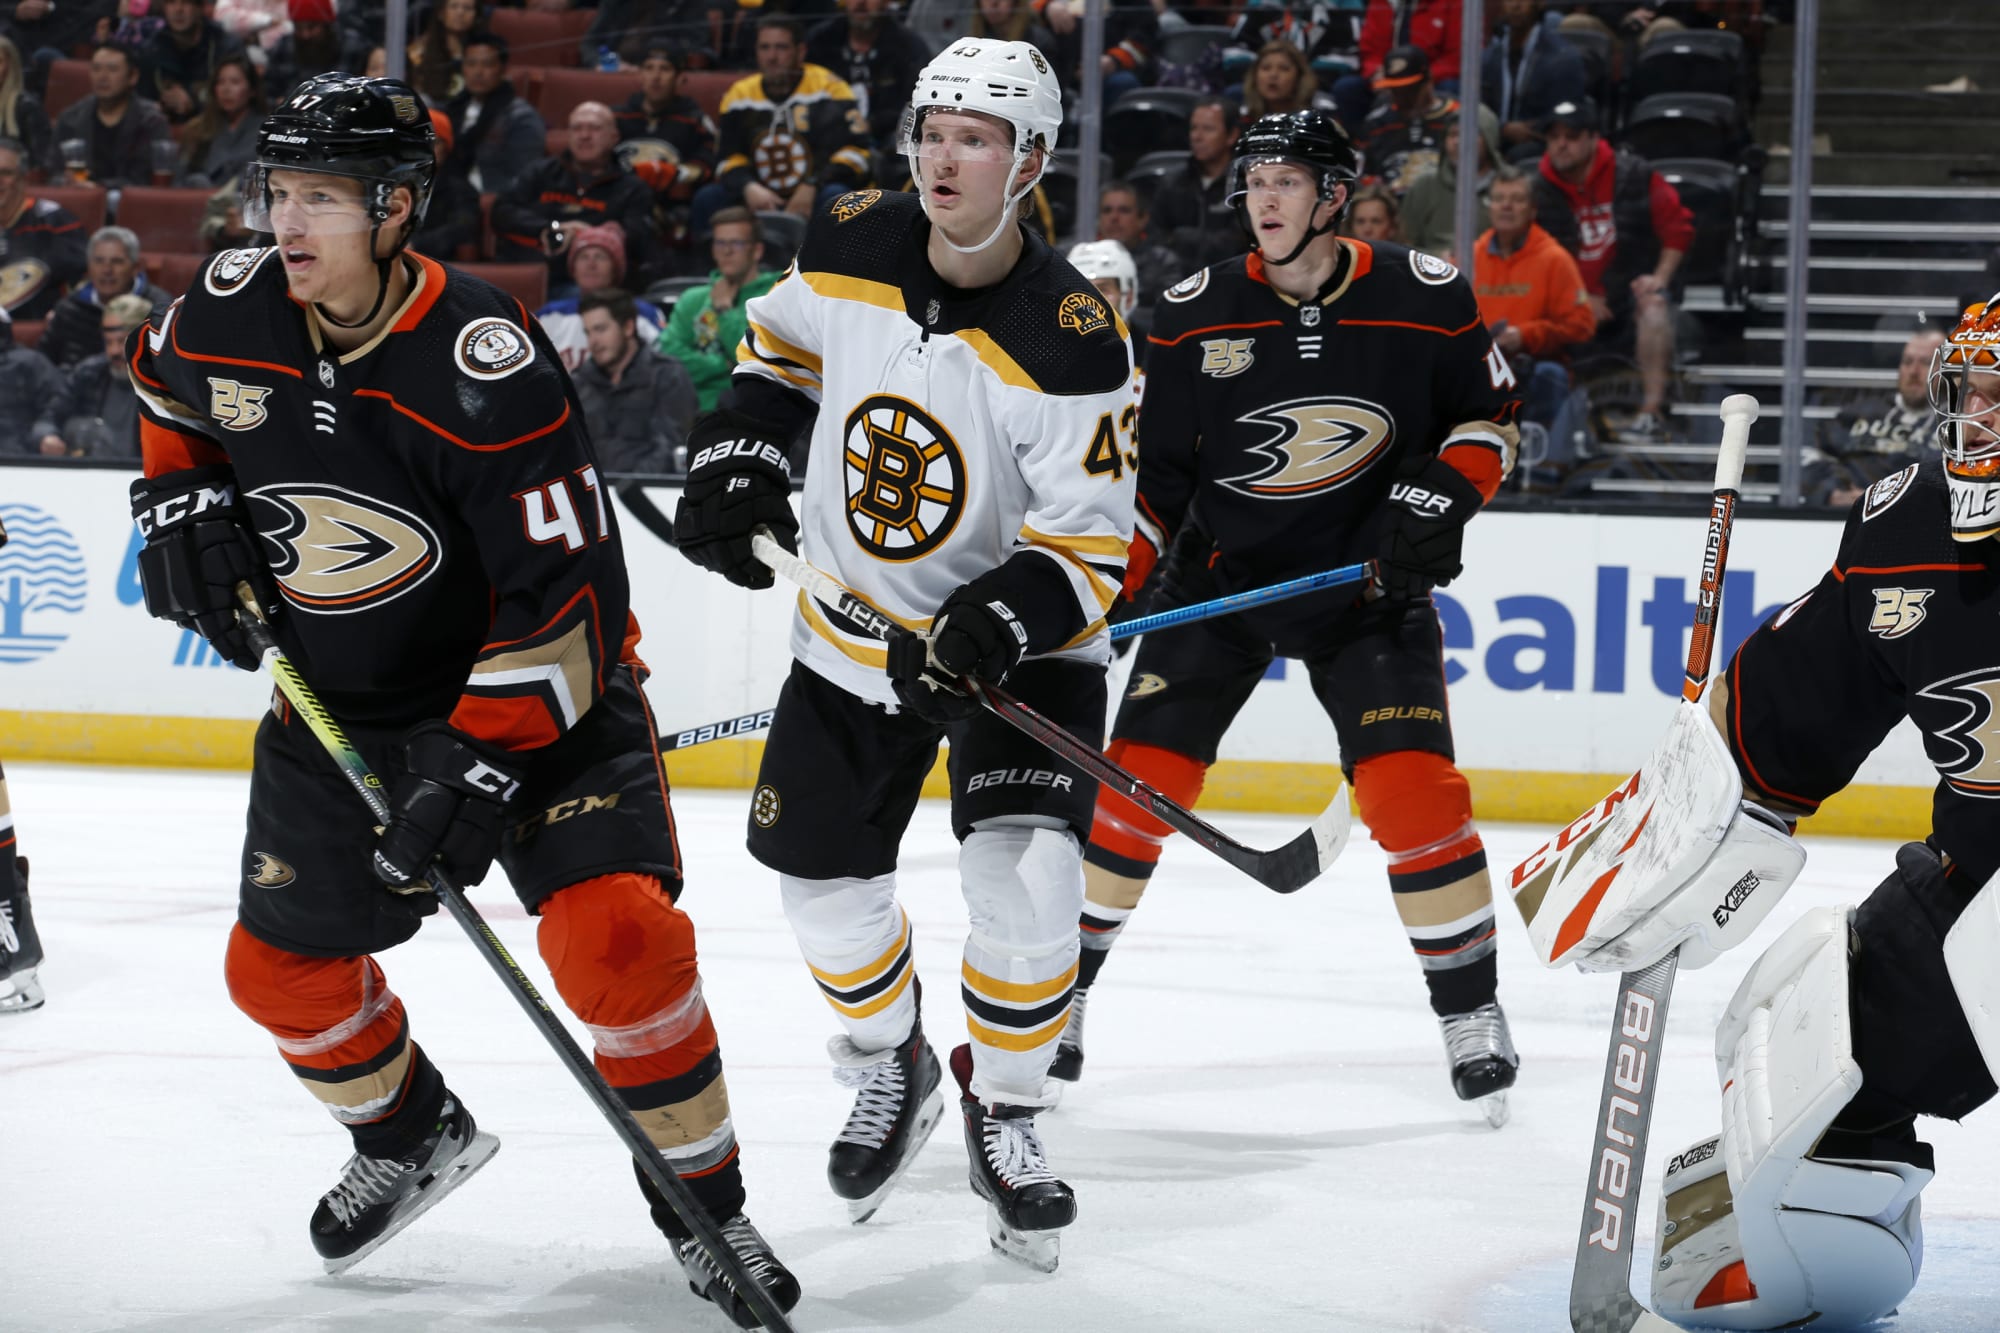 Anaheim Ducks vs. Boston Bruins: Live Stream, TV Channel, Start